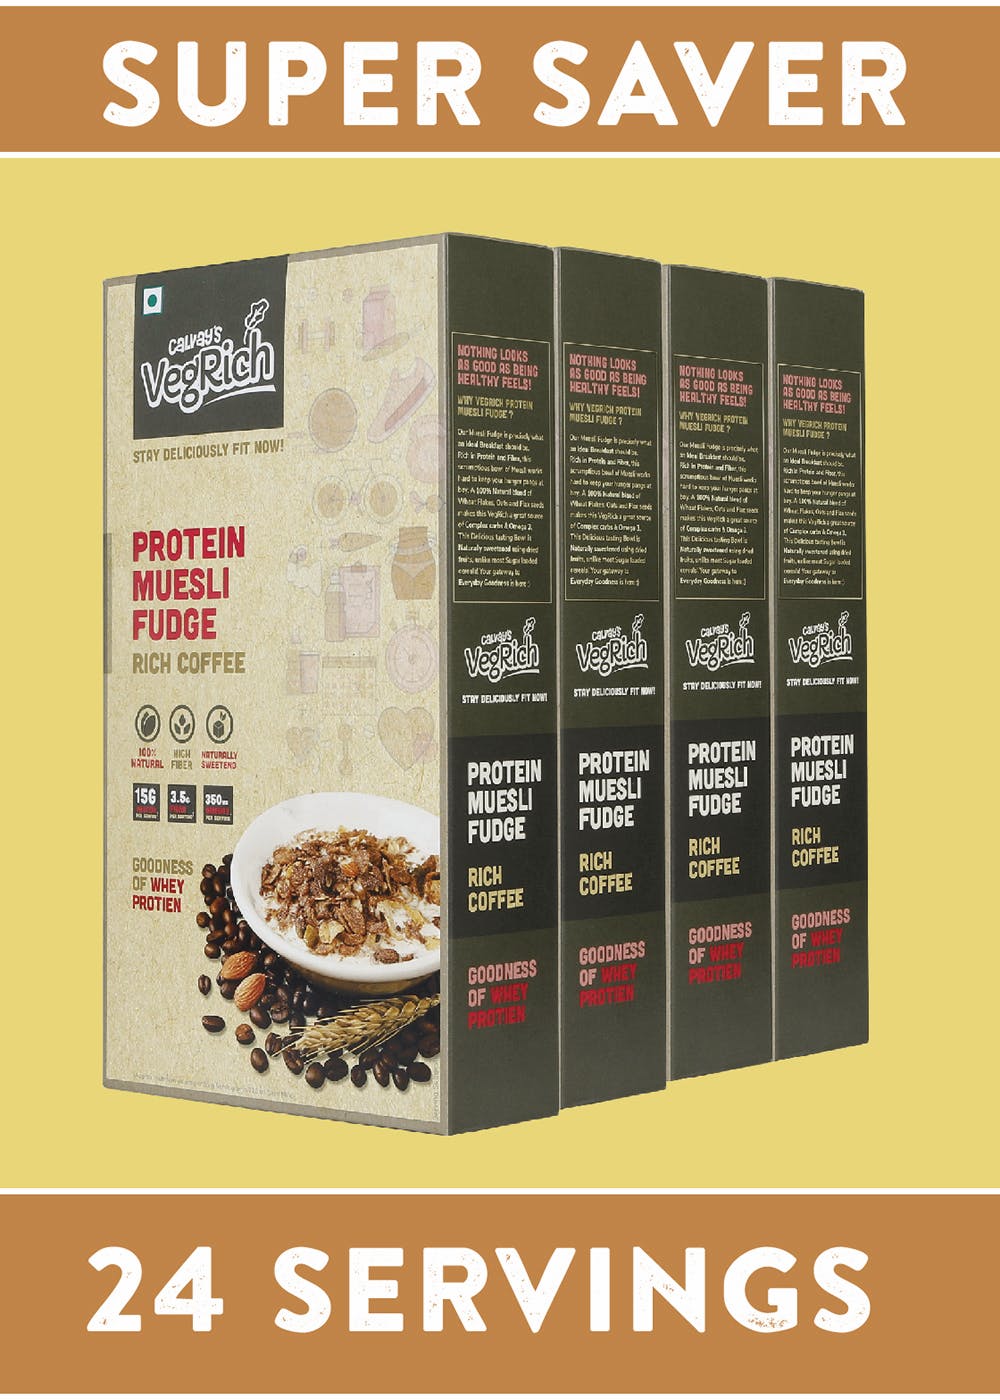 VegRich Protein Muesli Fudge: Rich Coffee - Super Saver Pack of 4 Boxes